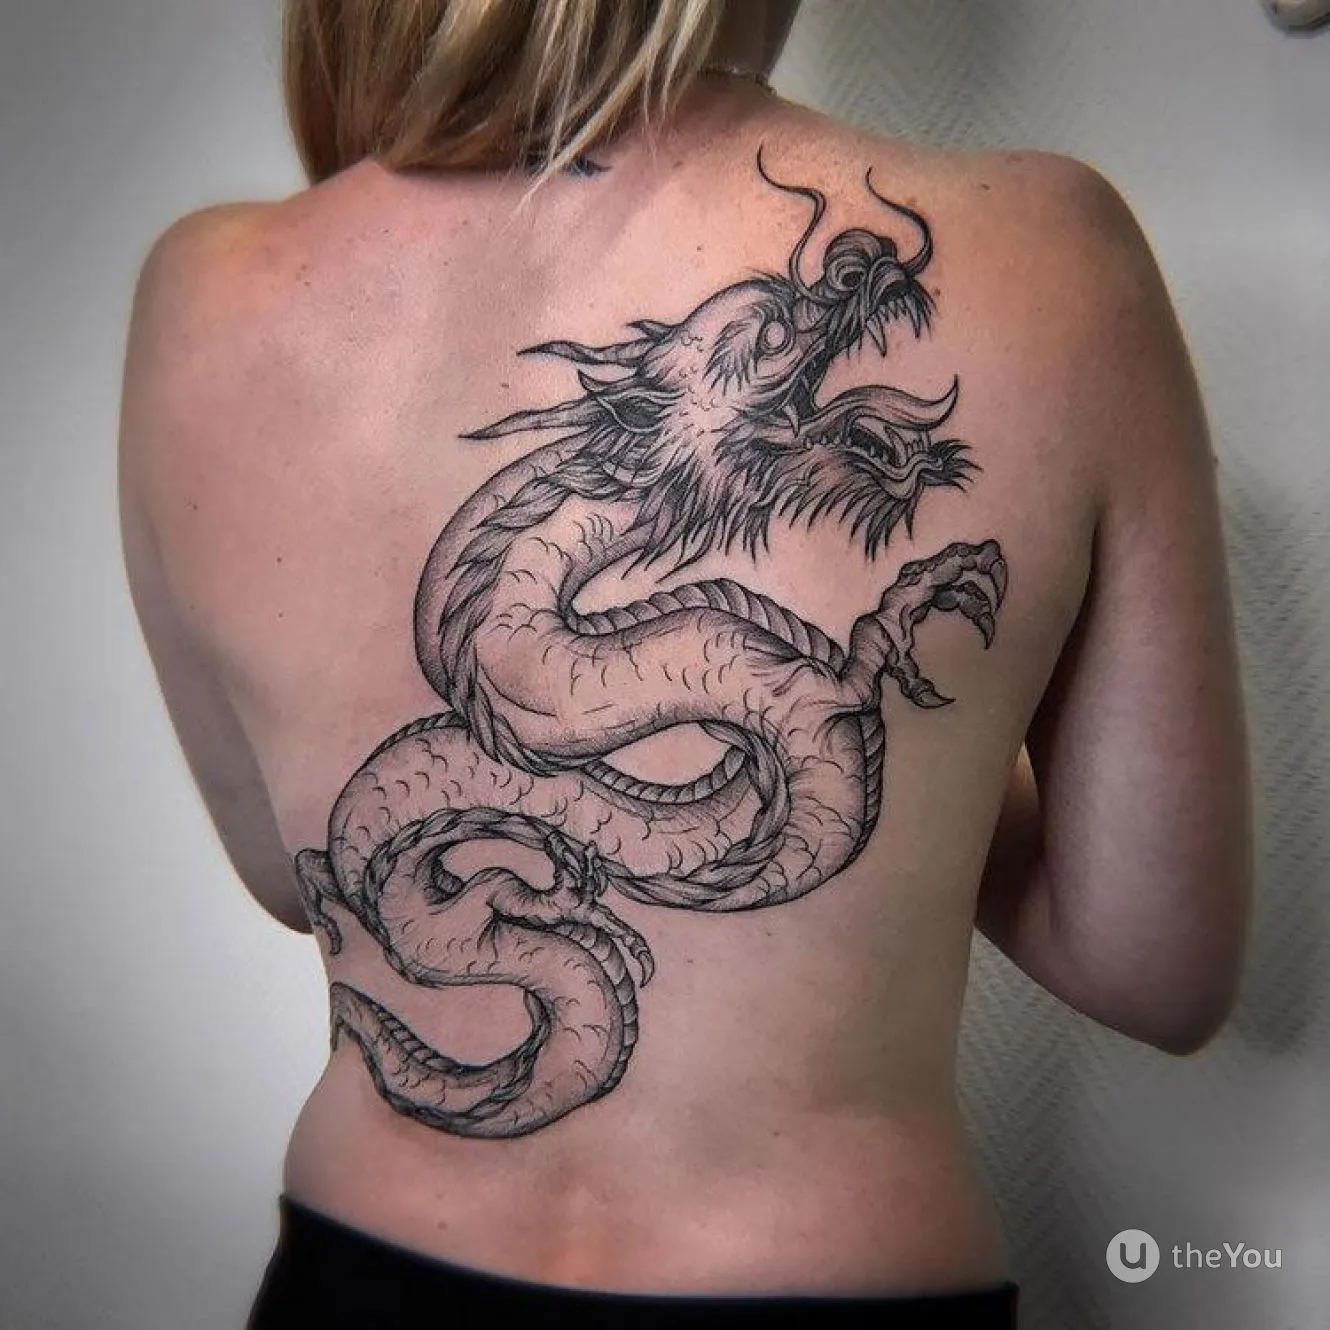 Значение тату дракона у девушки